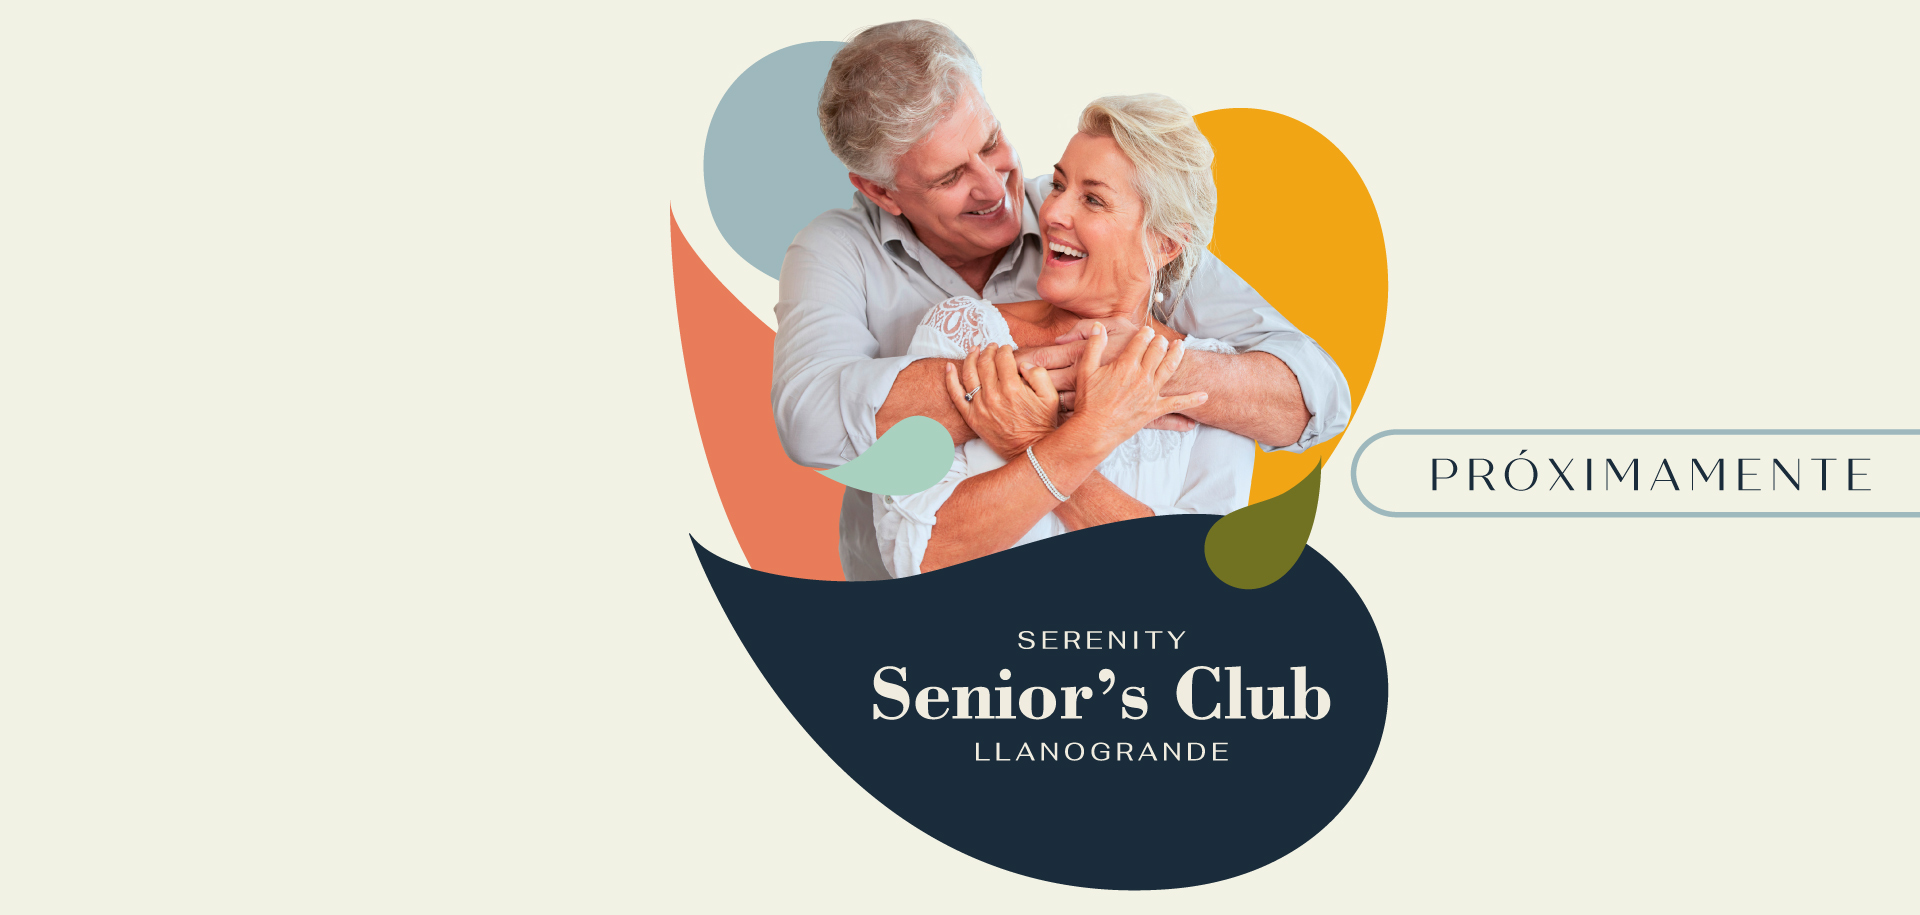 Serenity seniors club